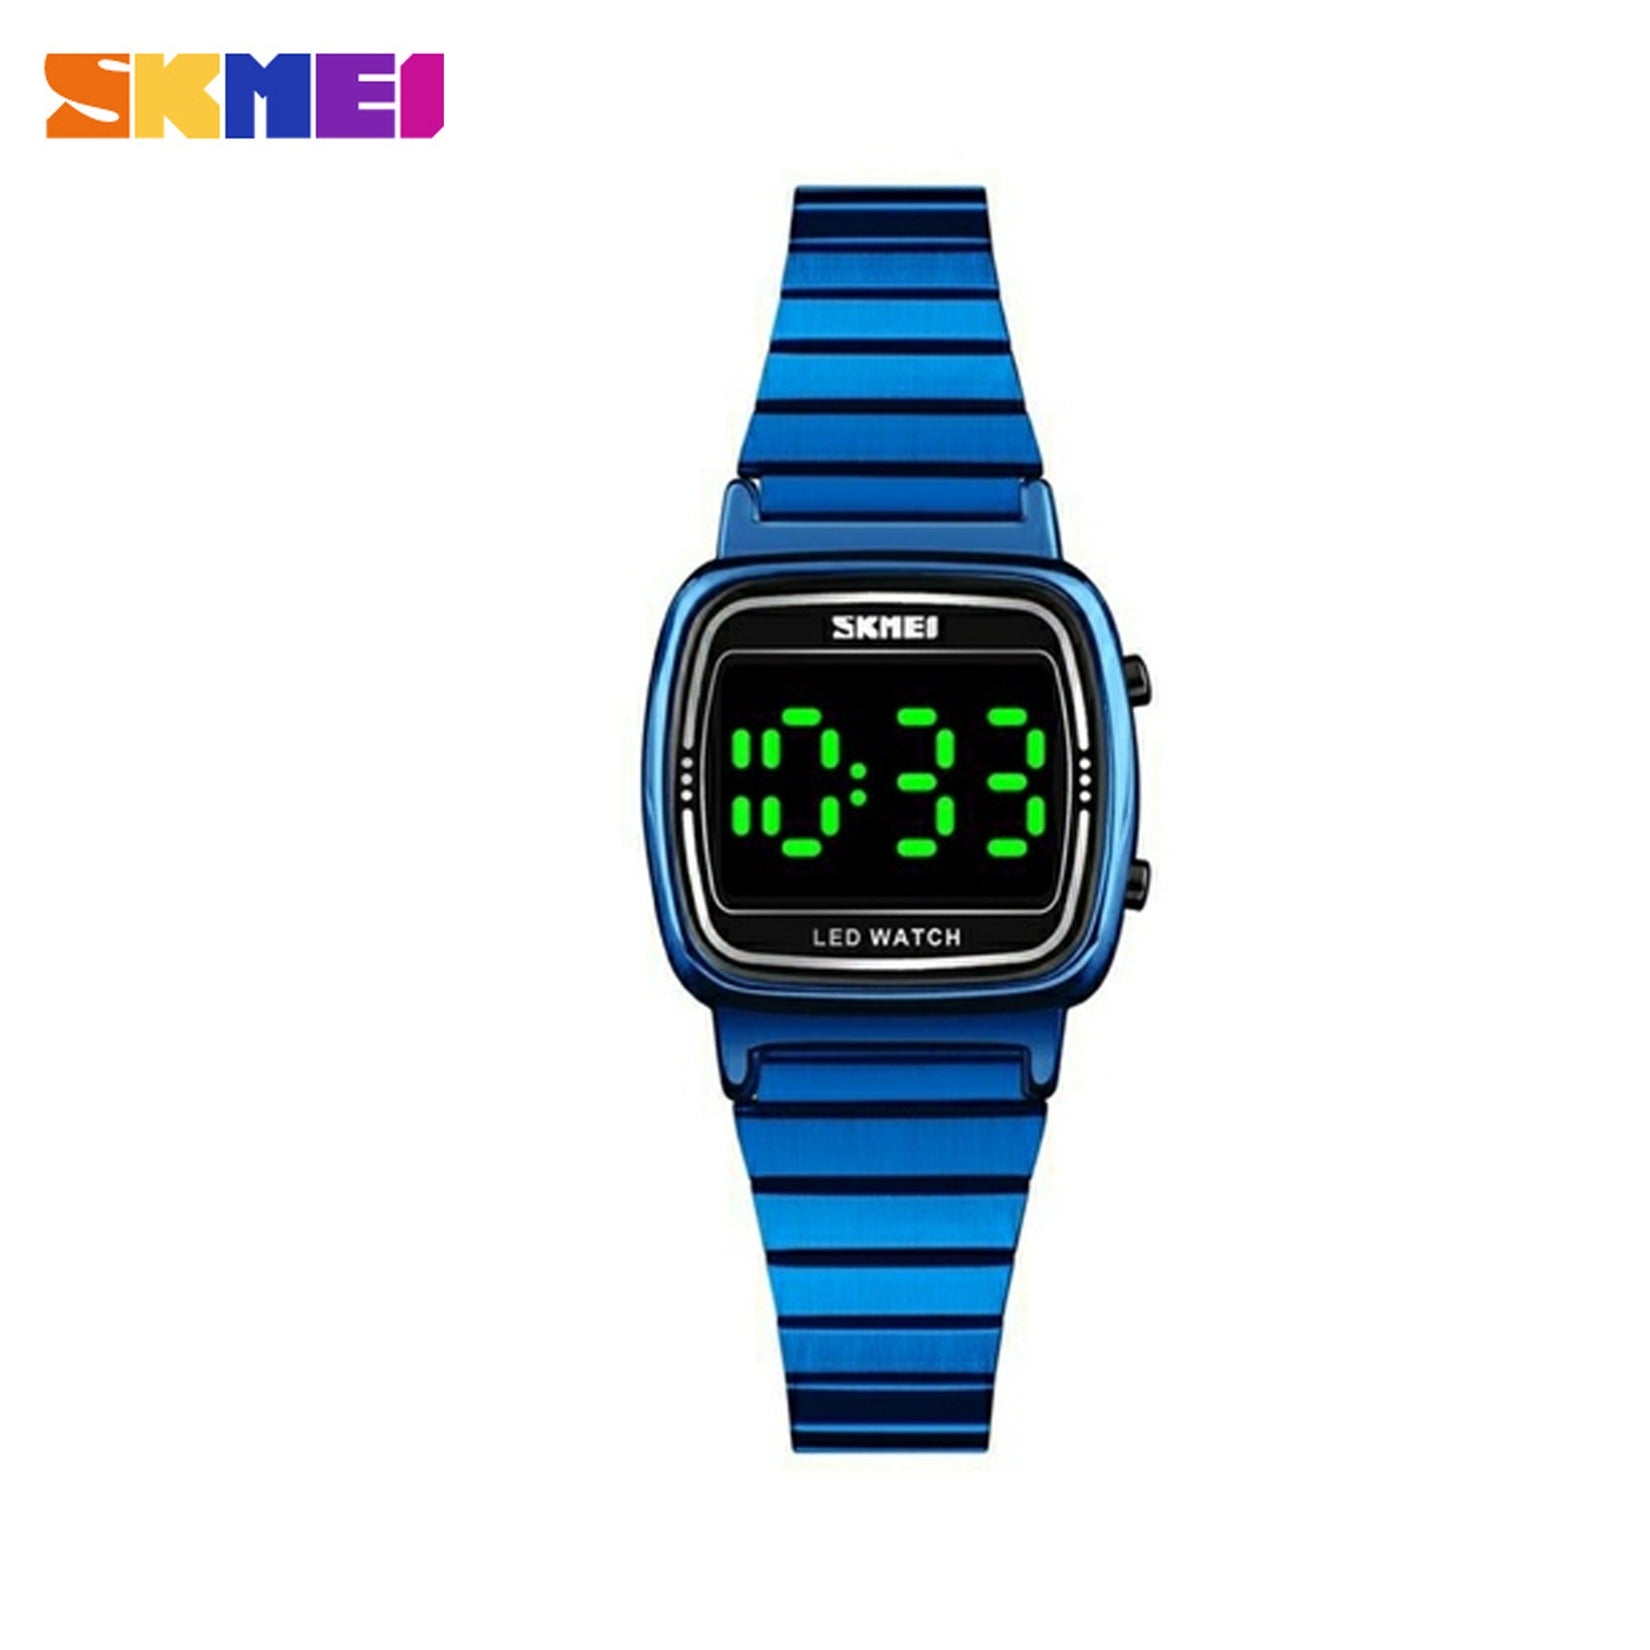 SKMEI G-Digit 1543 Ladies Fashion Wrist Watch | Green LED Display | WSK0002